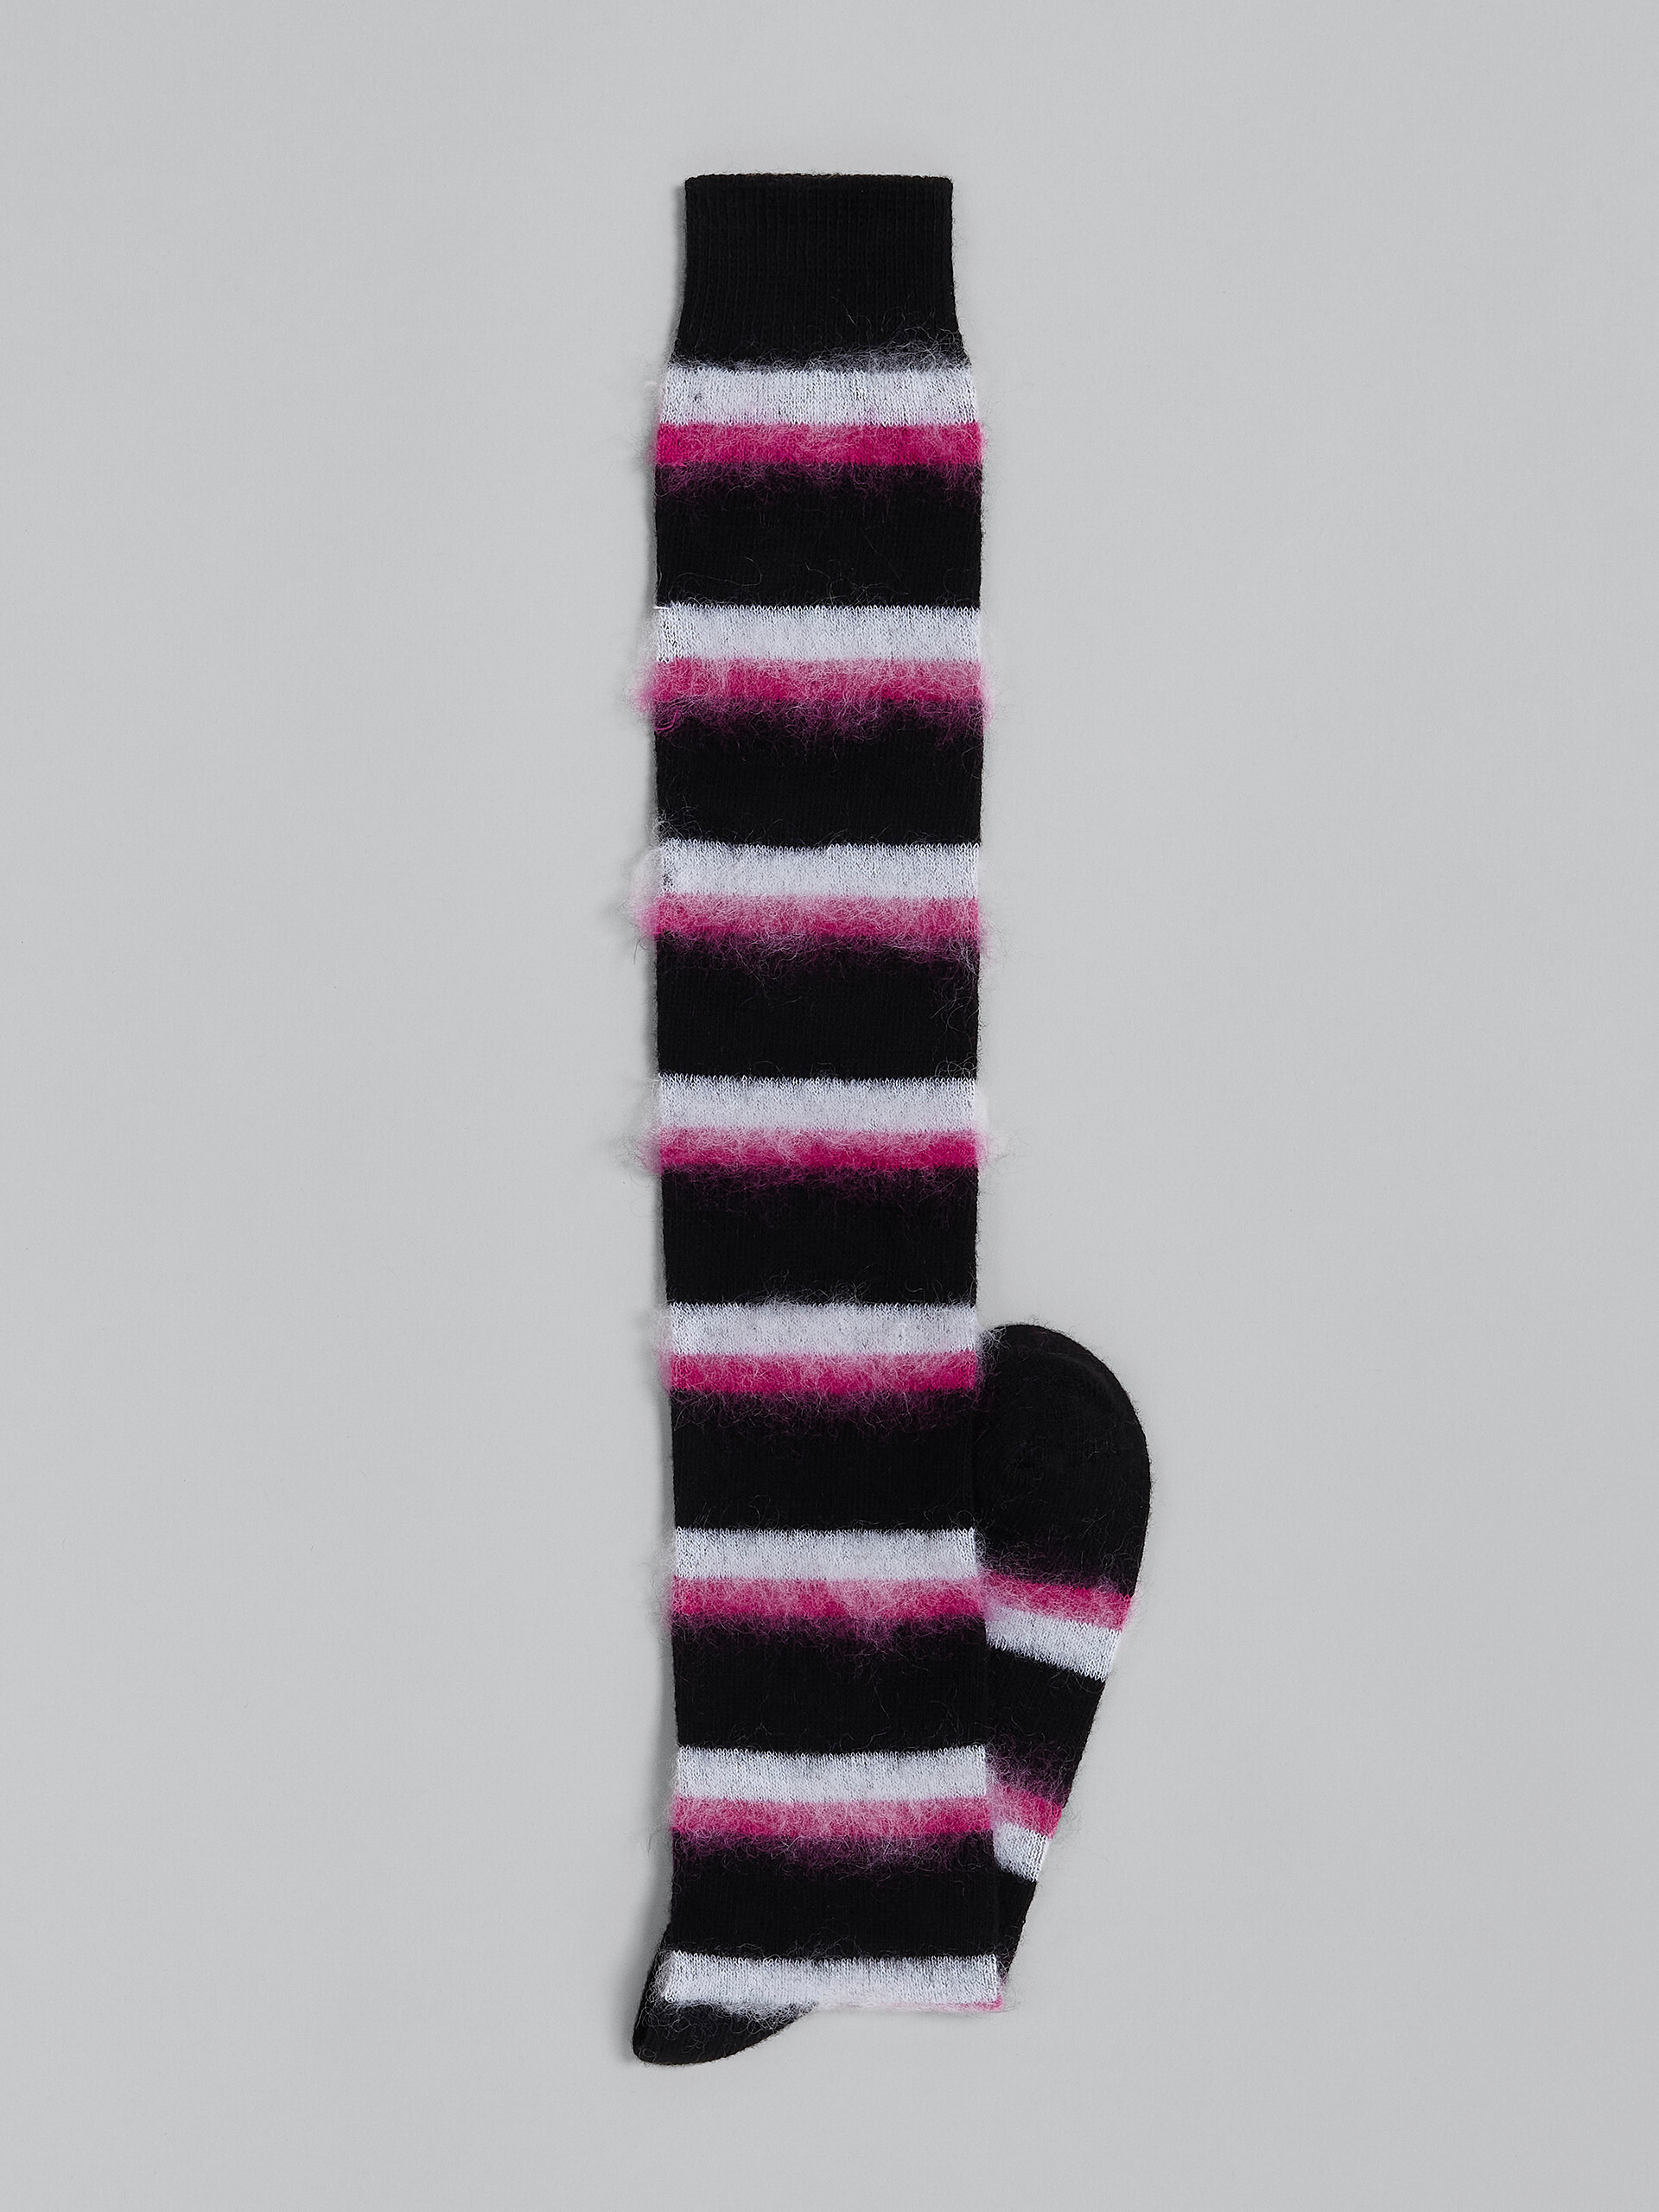 Mohair and cotton socks - Socks - Image 2